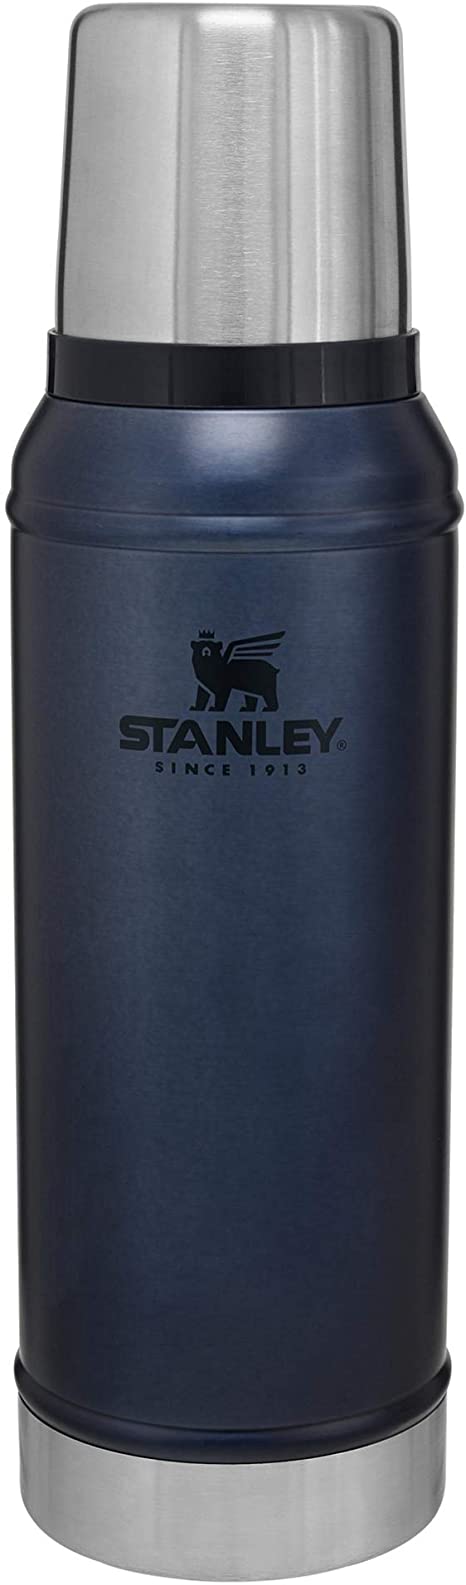 Stanley Classic Legendary Vacuum Insulated Bottle 1.0qt